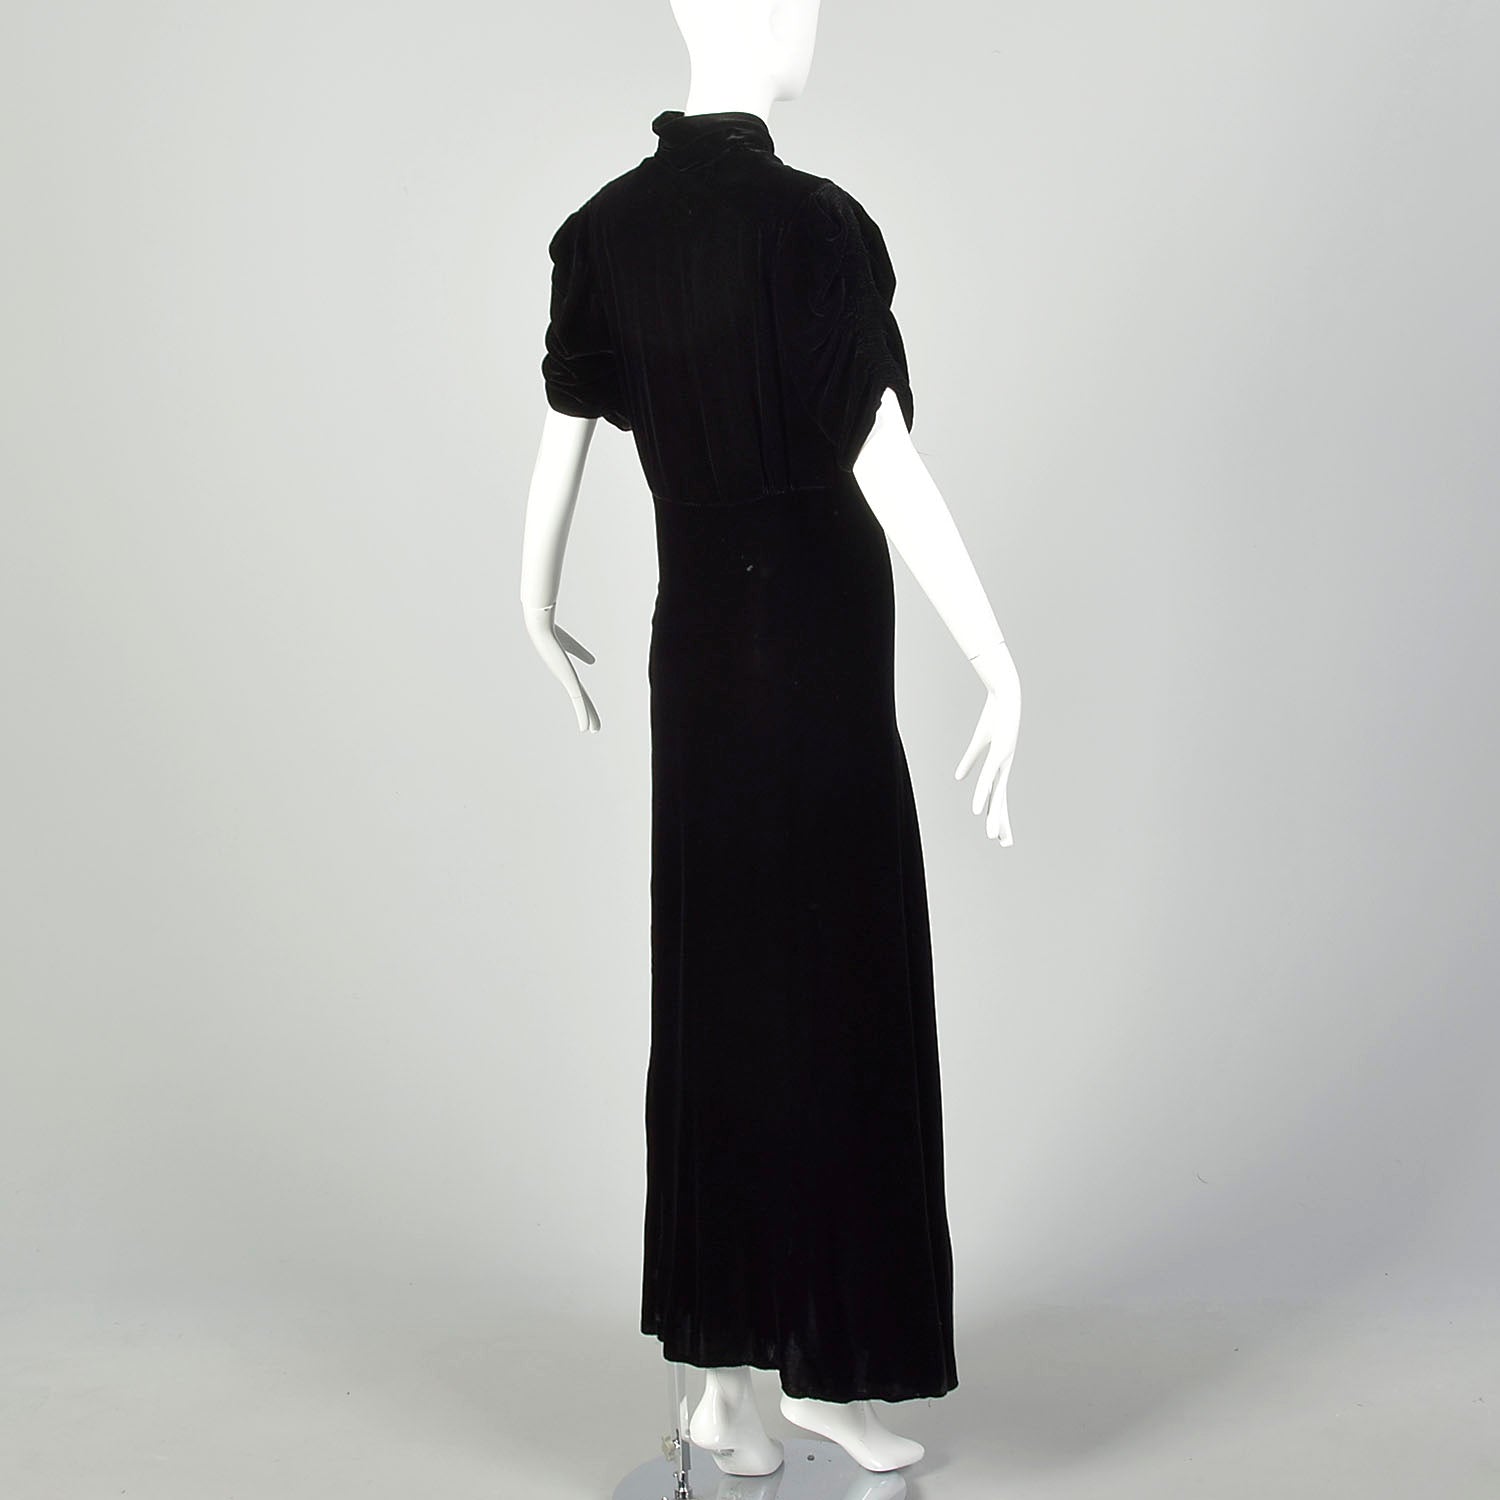 Small 1930s Dress Formal Black Silk Velvet Keyhole Neckline Evening Gown